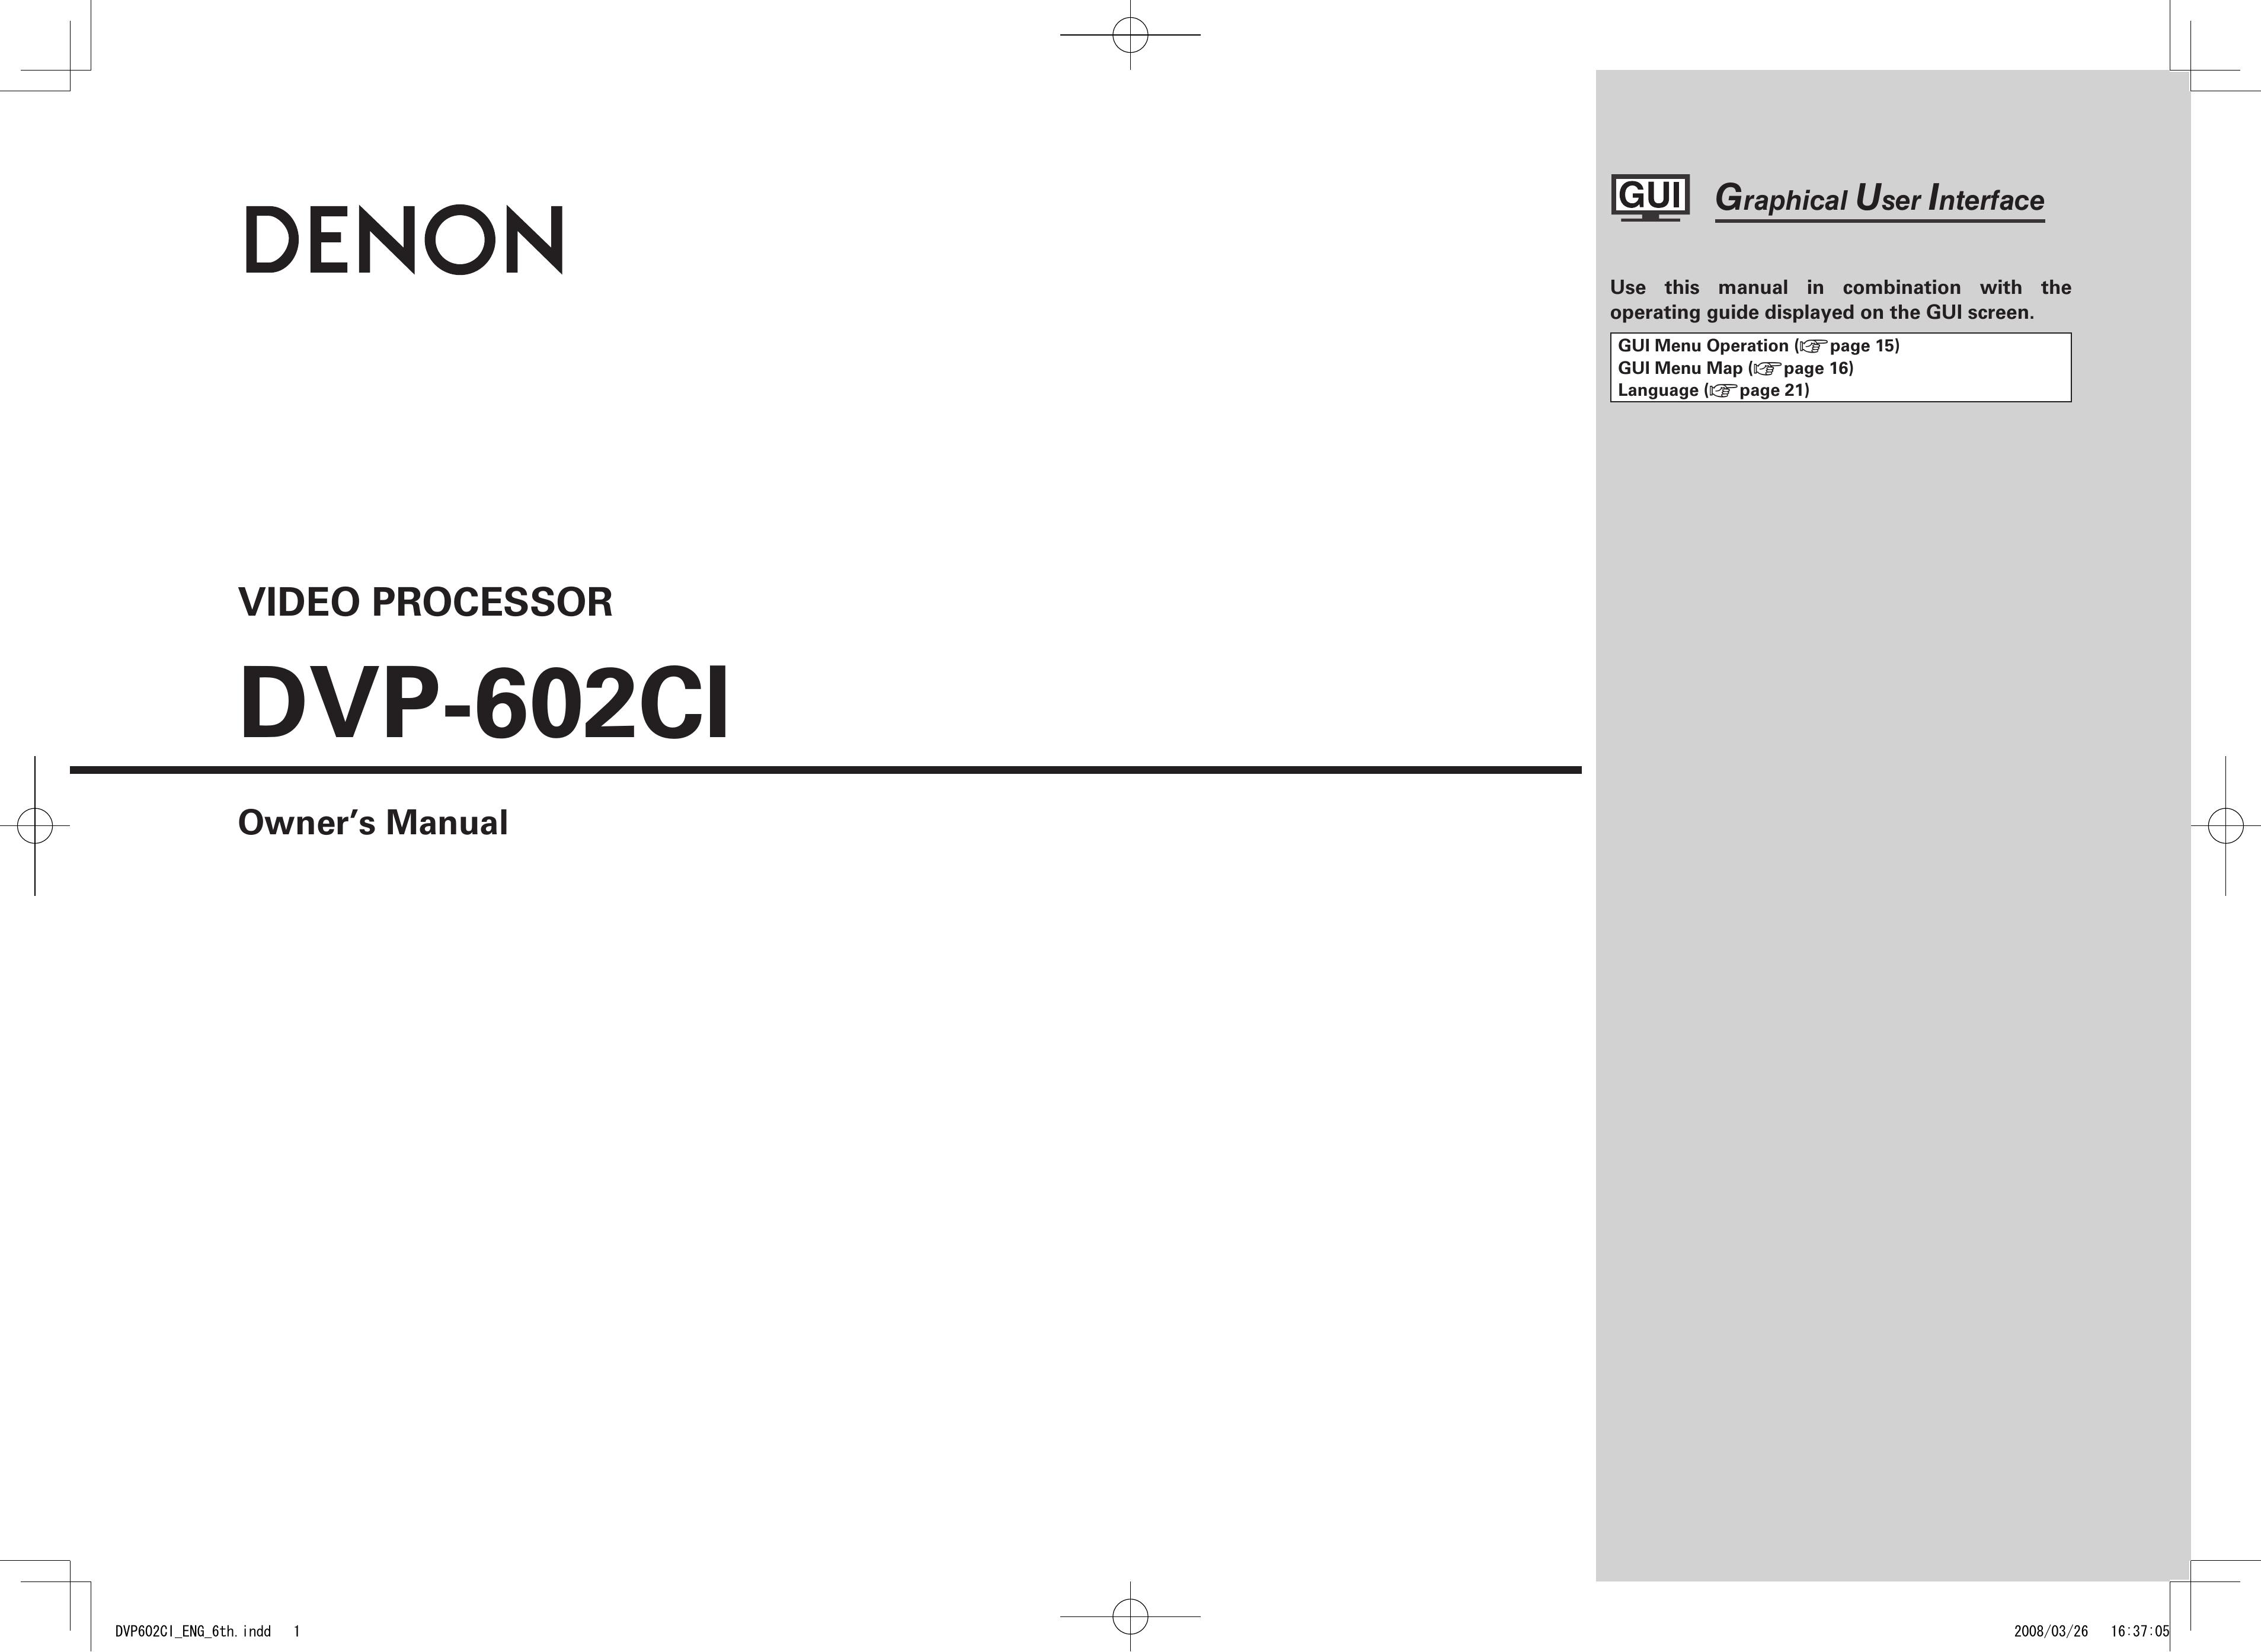 Denon DVP-602CI Camcorder User Manual